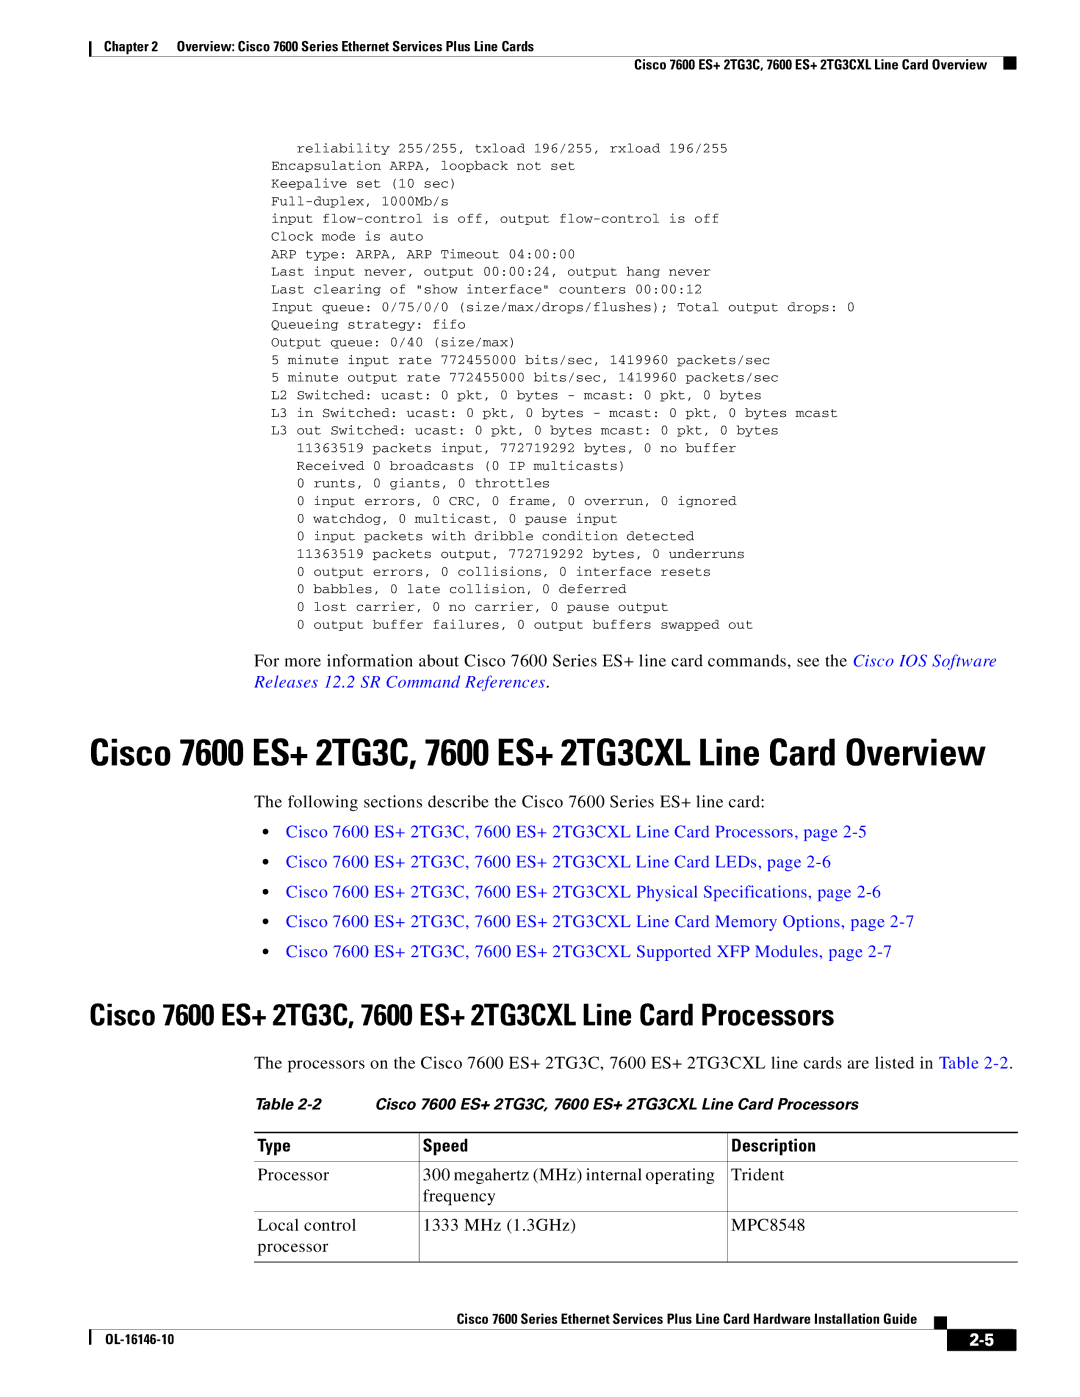 Cisco Systems OL-16146-10 manual Cisco 7600 ES+ 2TG3C, 7600 ES+ 2TG3CXL Line Card Processors, Type Speed Description 